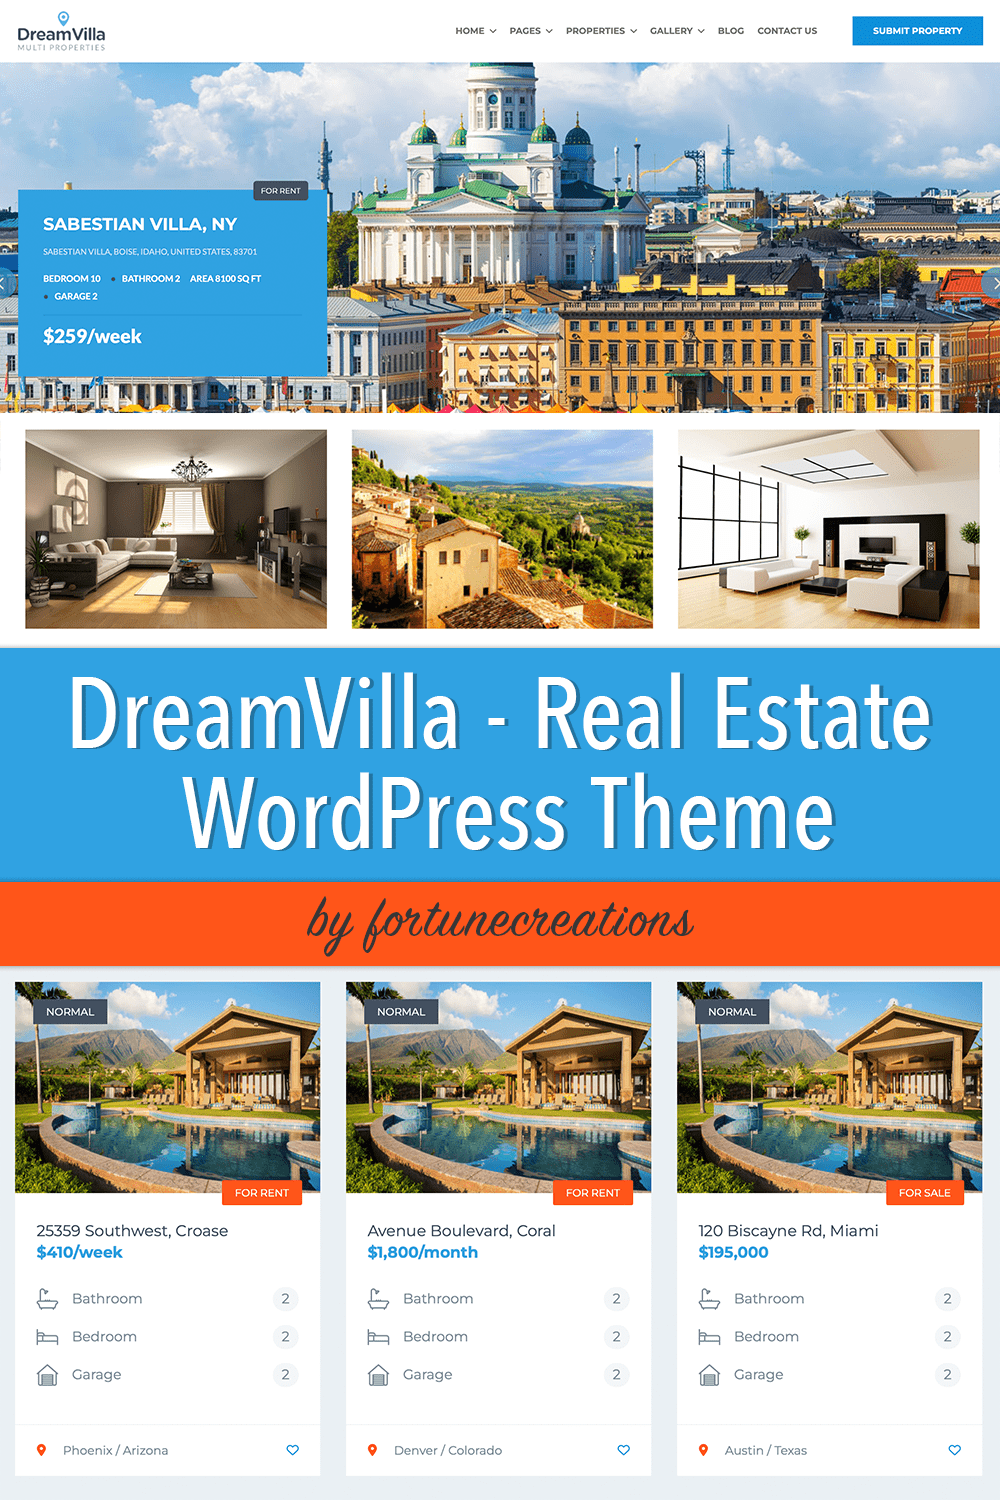 DreamVilla - Real Estate WordPress Theme - Pinterest.